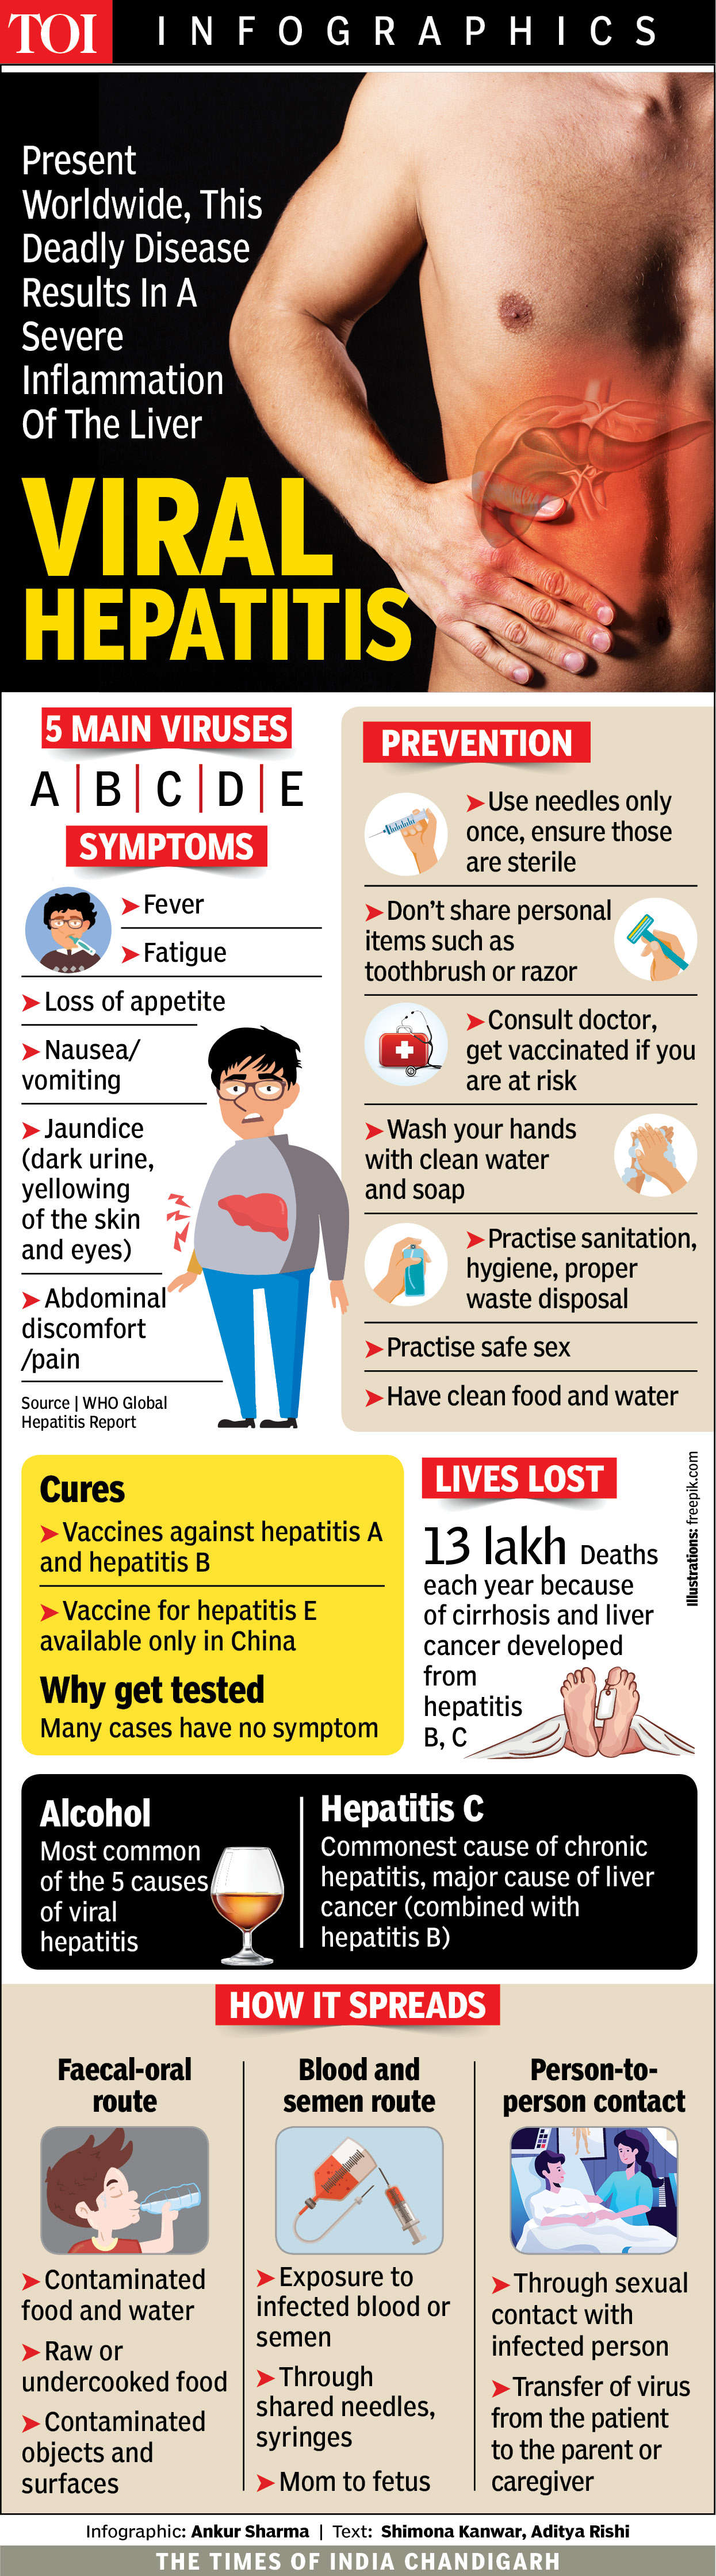 Save Your Liver Hepatitis Helpline Active In Chandigarh Chandigarh News Times Of India